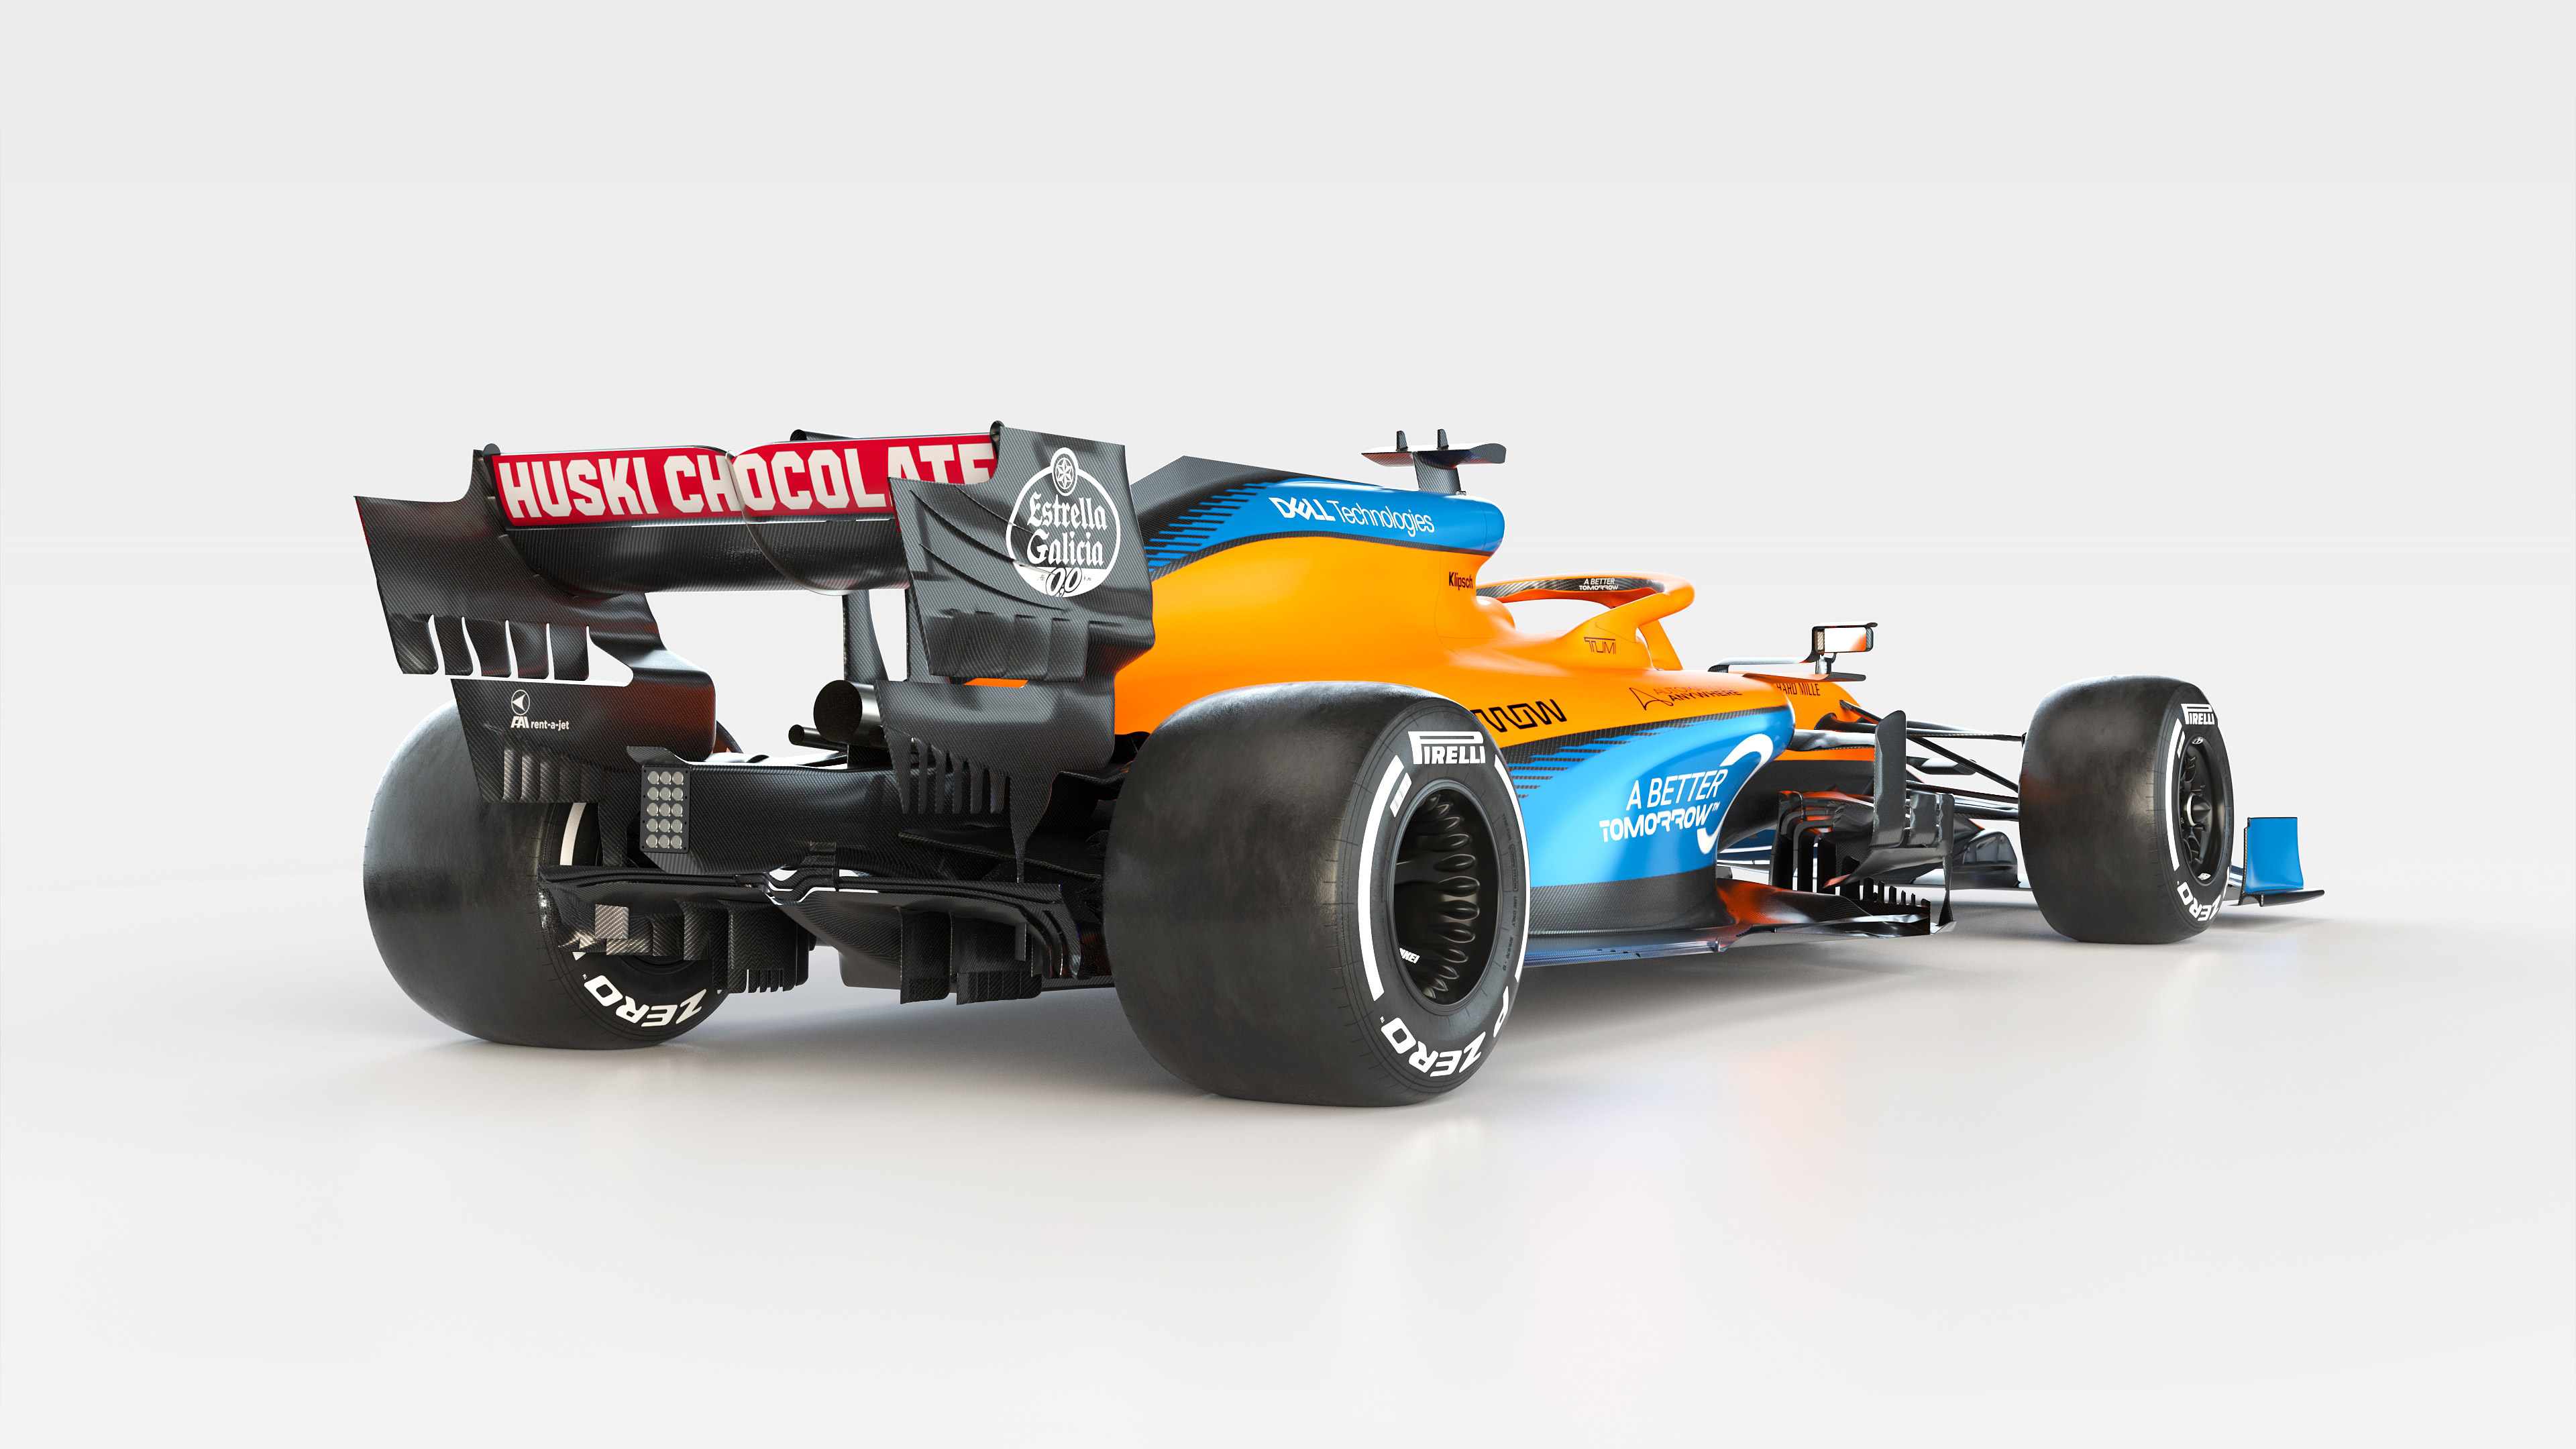 General 3840x2160 McLaren Formula 1 car vehicle race cars Formula 1 British cars